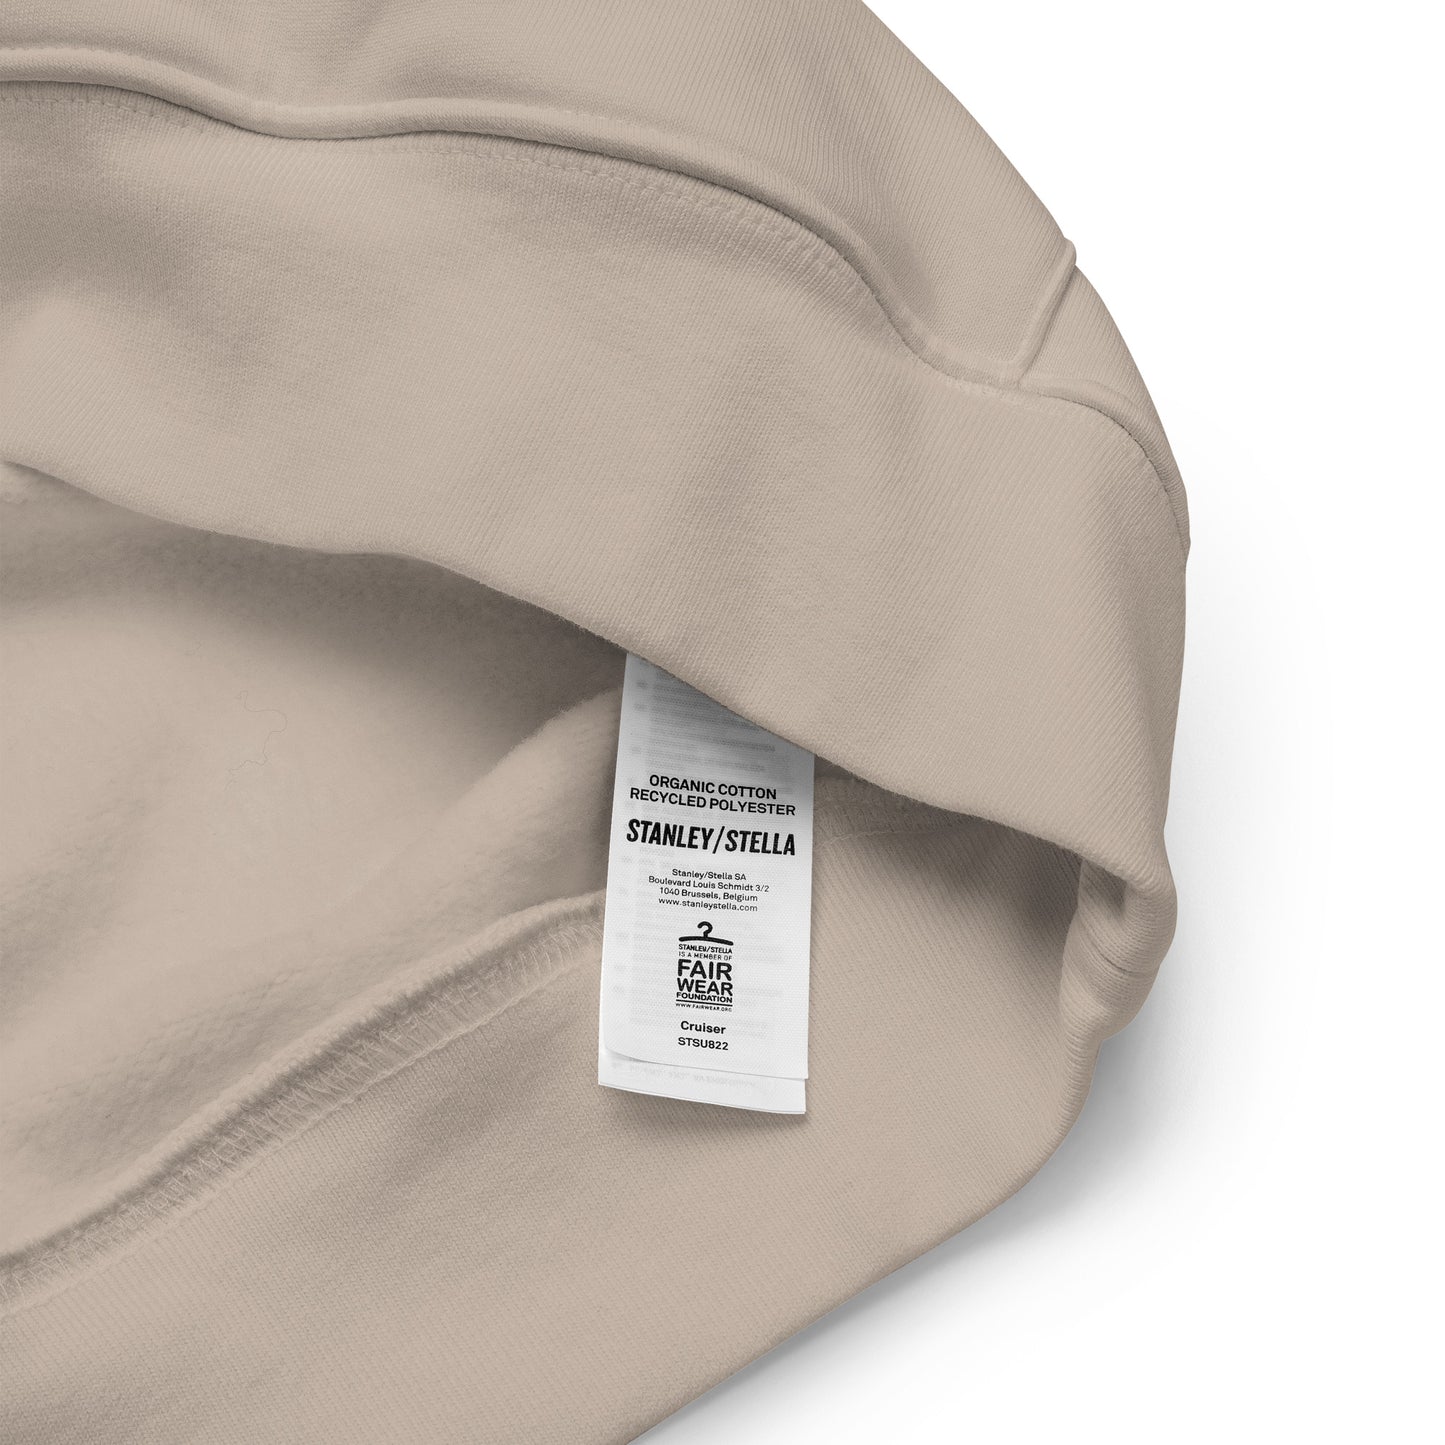 Soleyl Plain - Premium Unisex eco hoodie